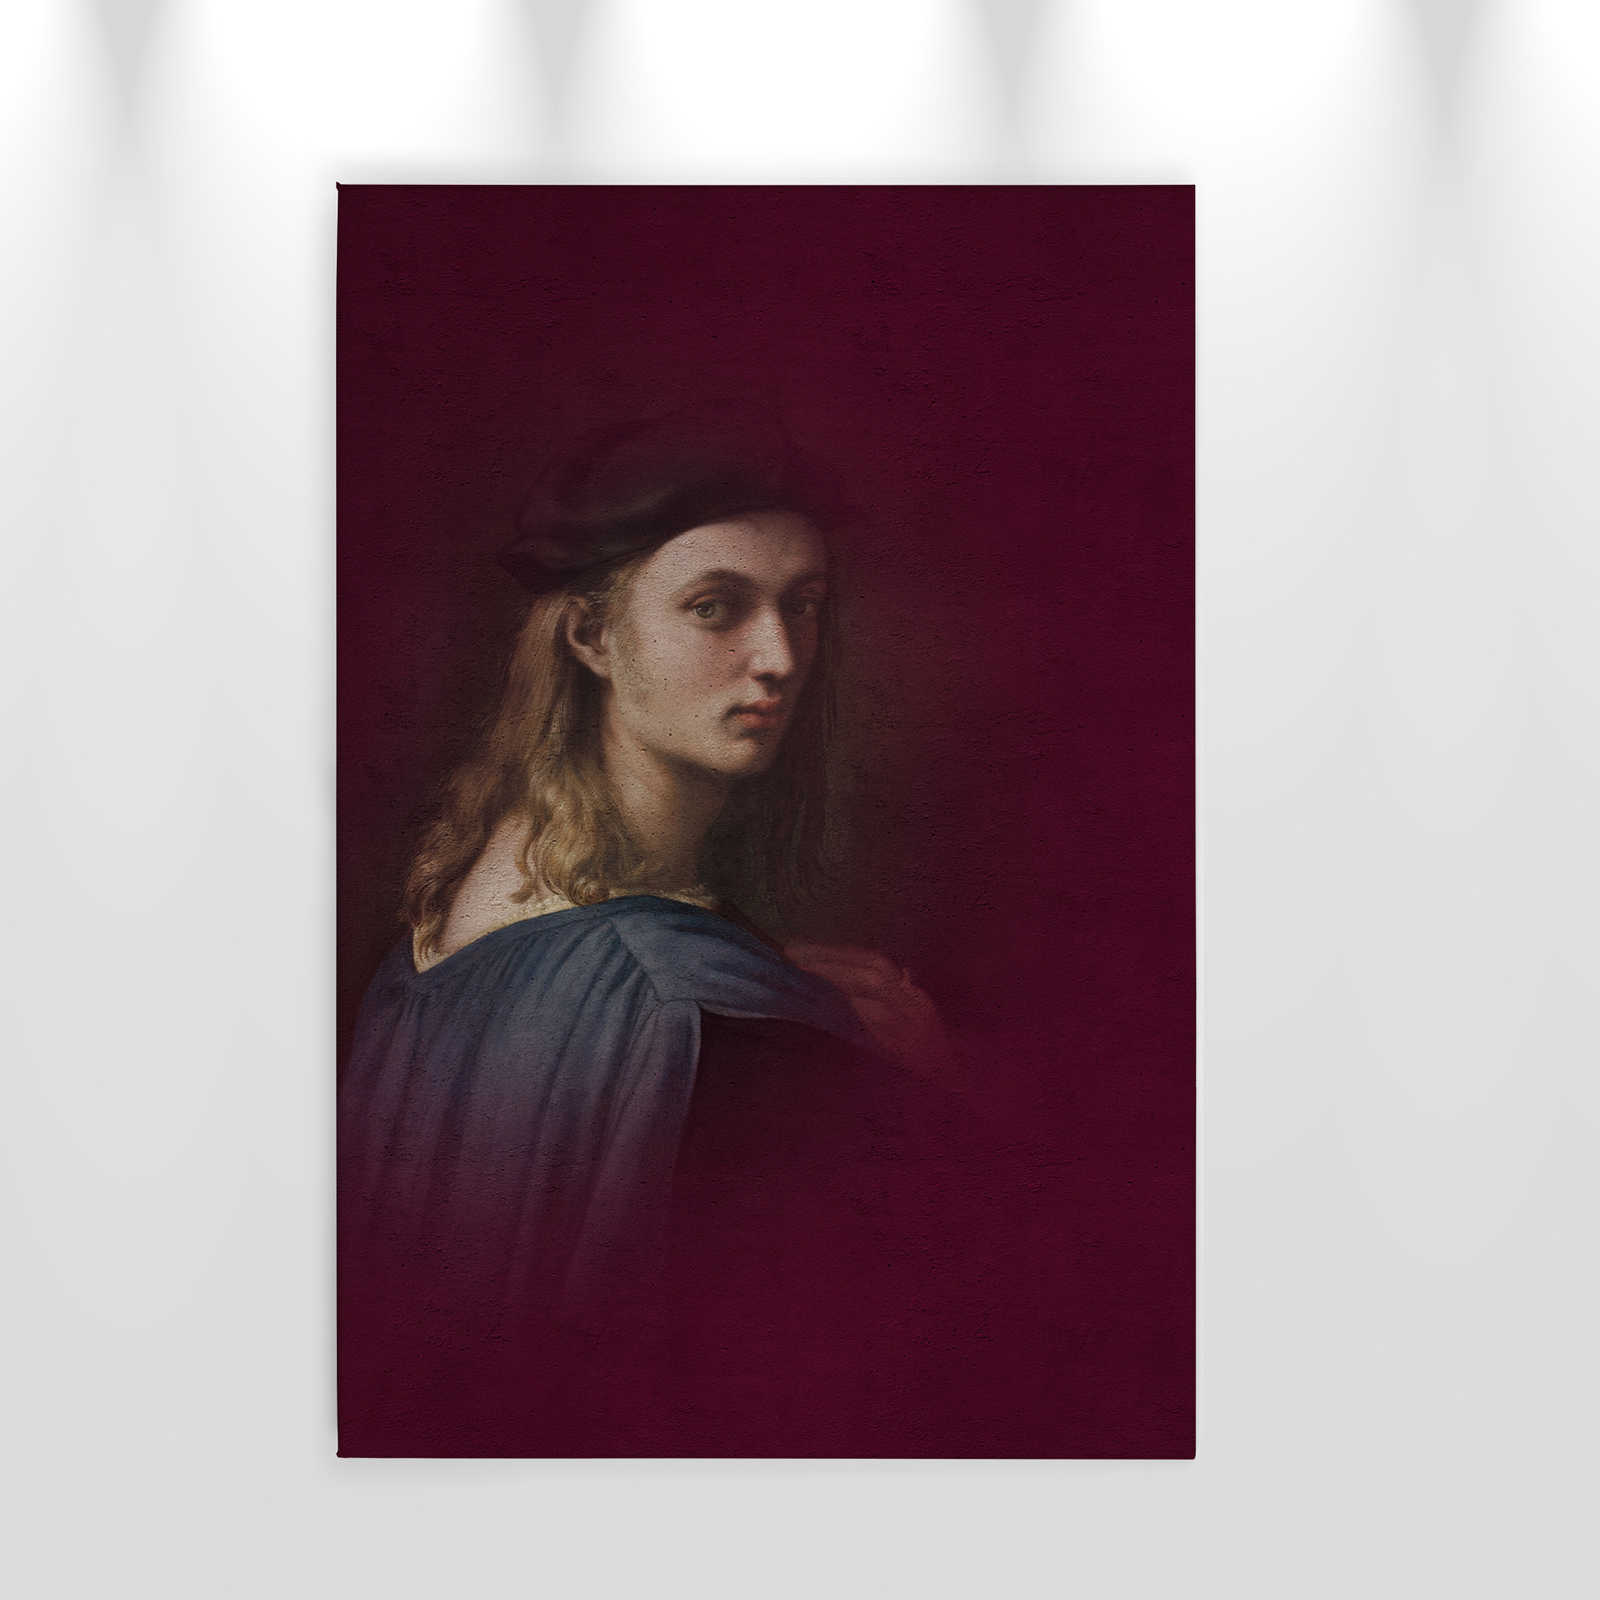             Canvas painting classic portrait young man - 0,60 m x 0,90 m
        